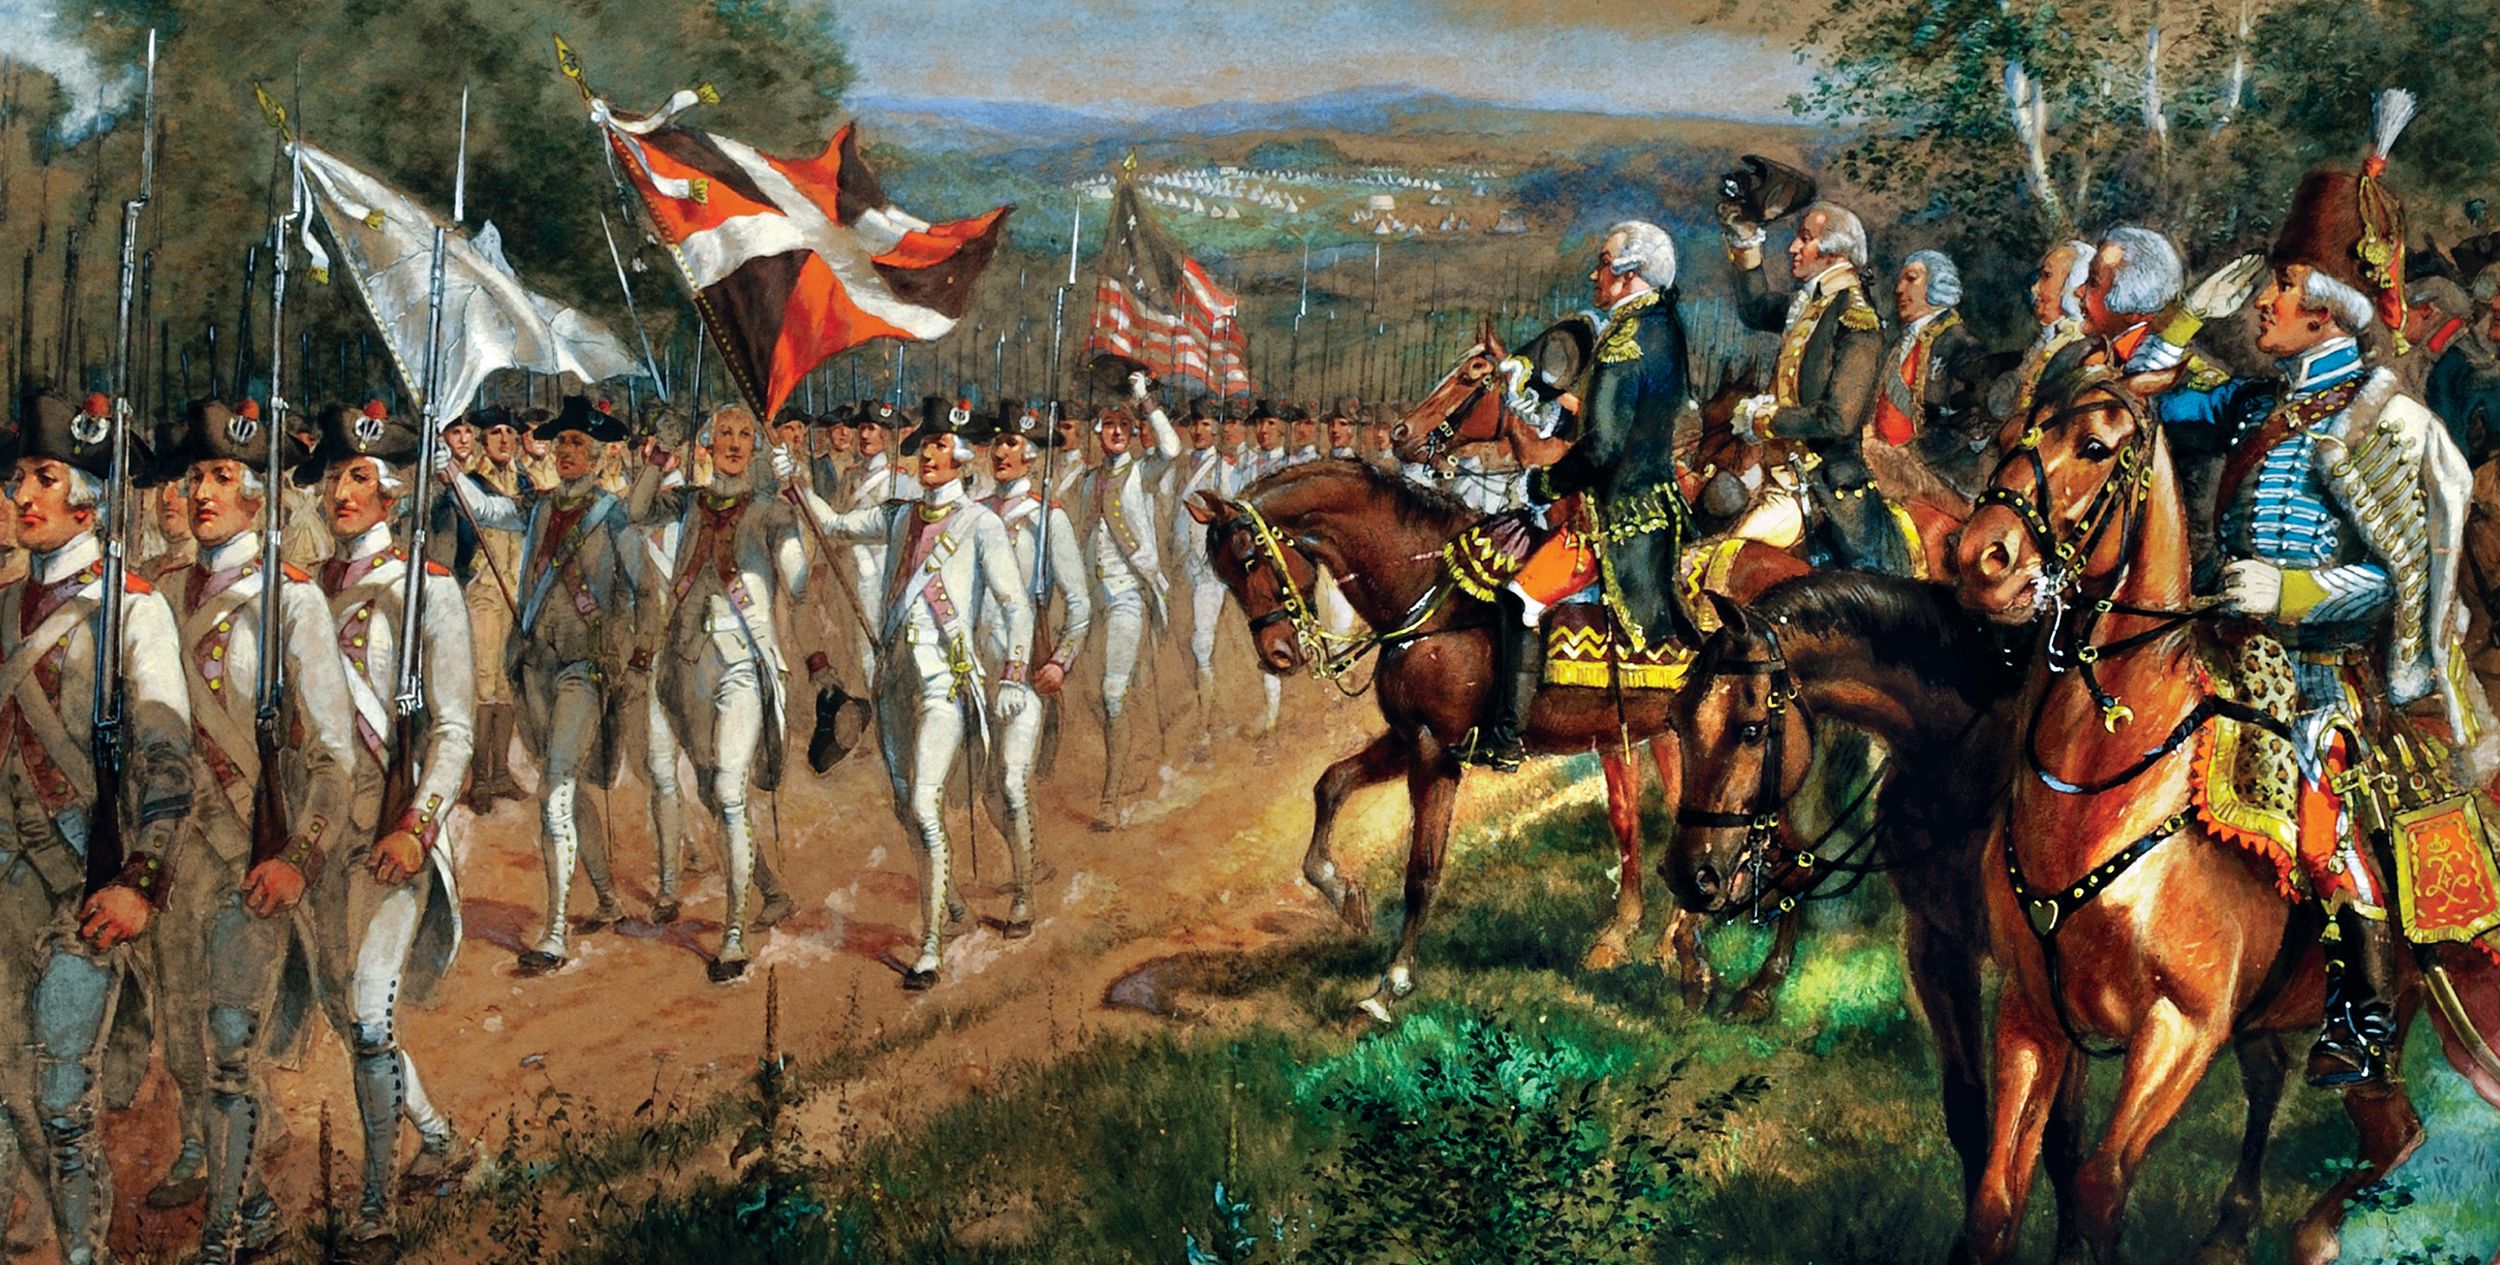 Washington and Rochambeau salute as French infantry march past en route to Yorktown. Armand-Louis de Gontuart, Duc de Lauzun, who accompanied Rochambeau, salutes at far right.